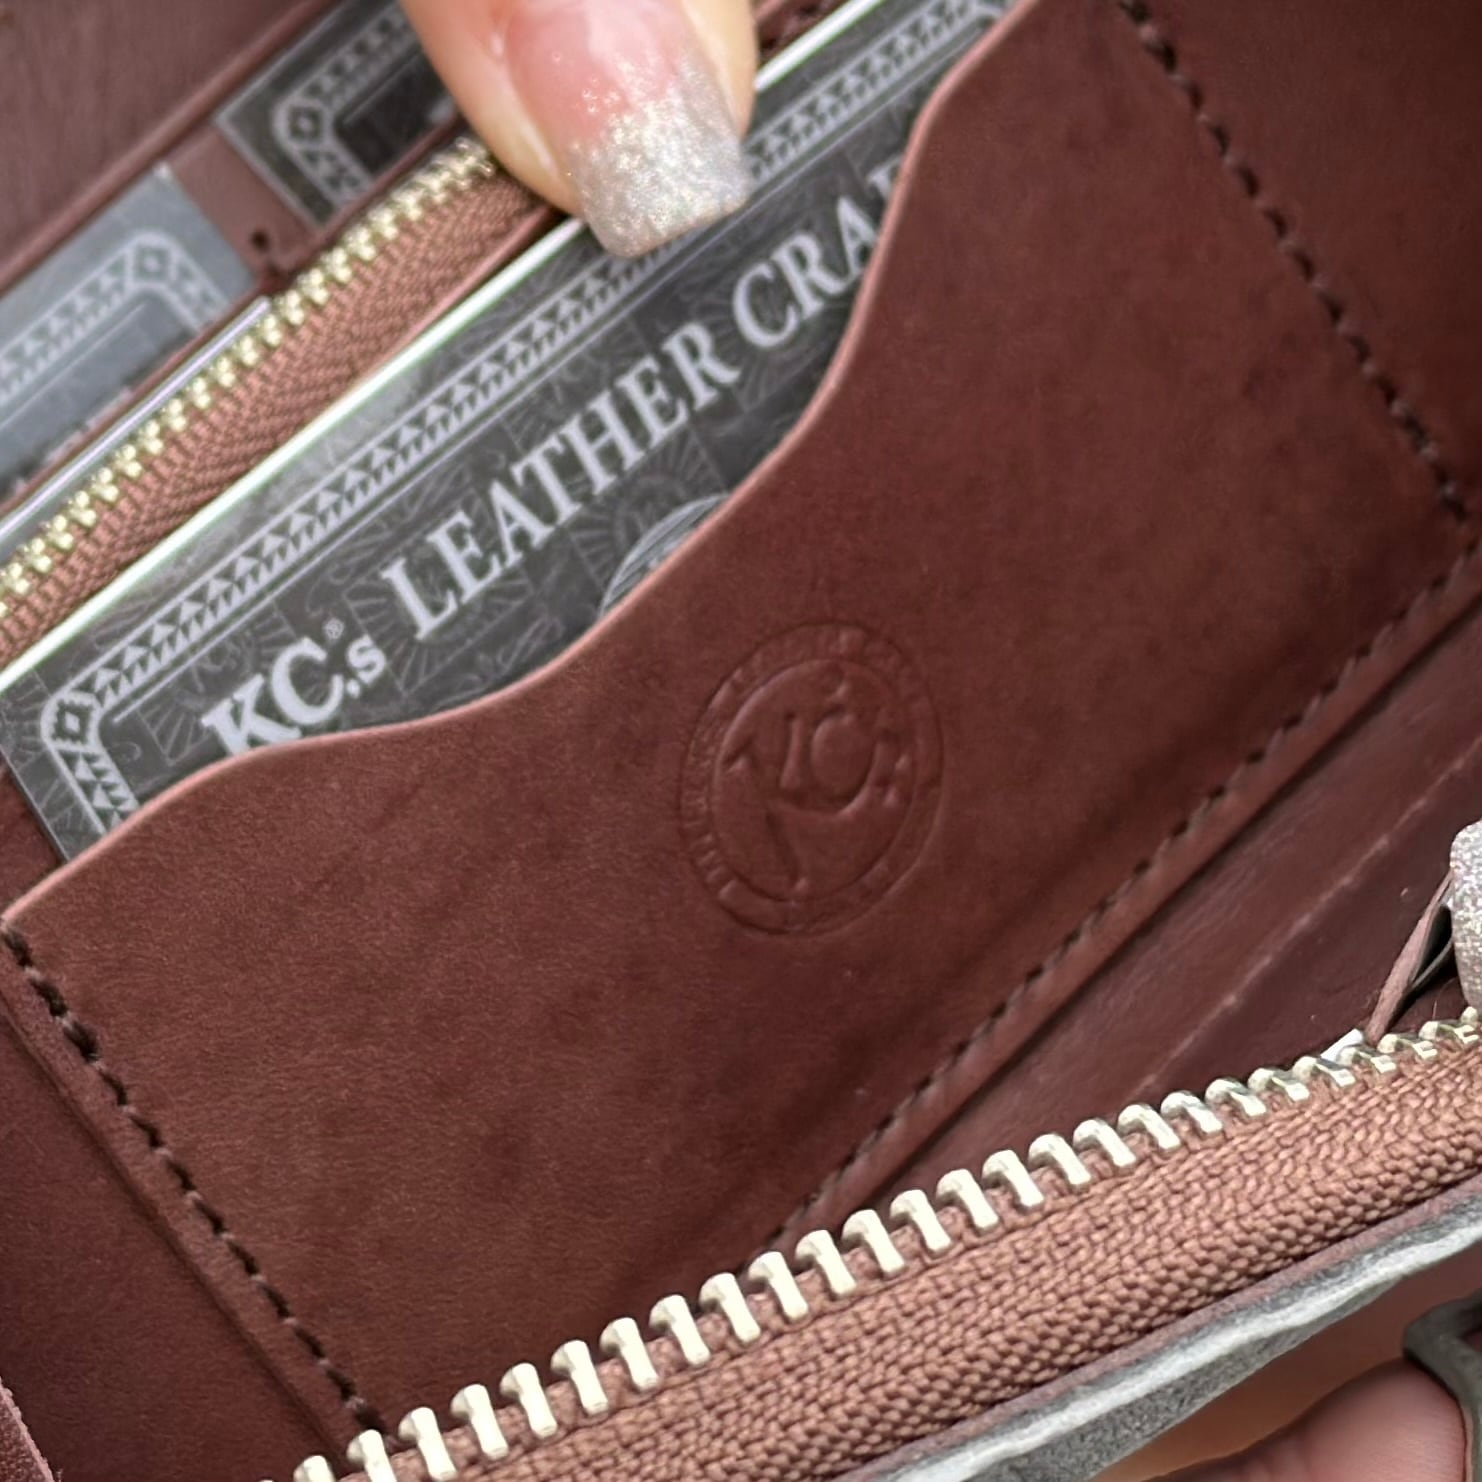 kc's elephant leather wallet